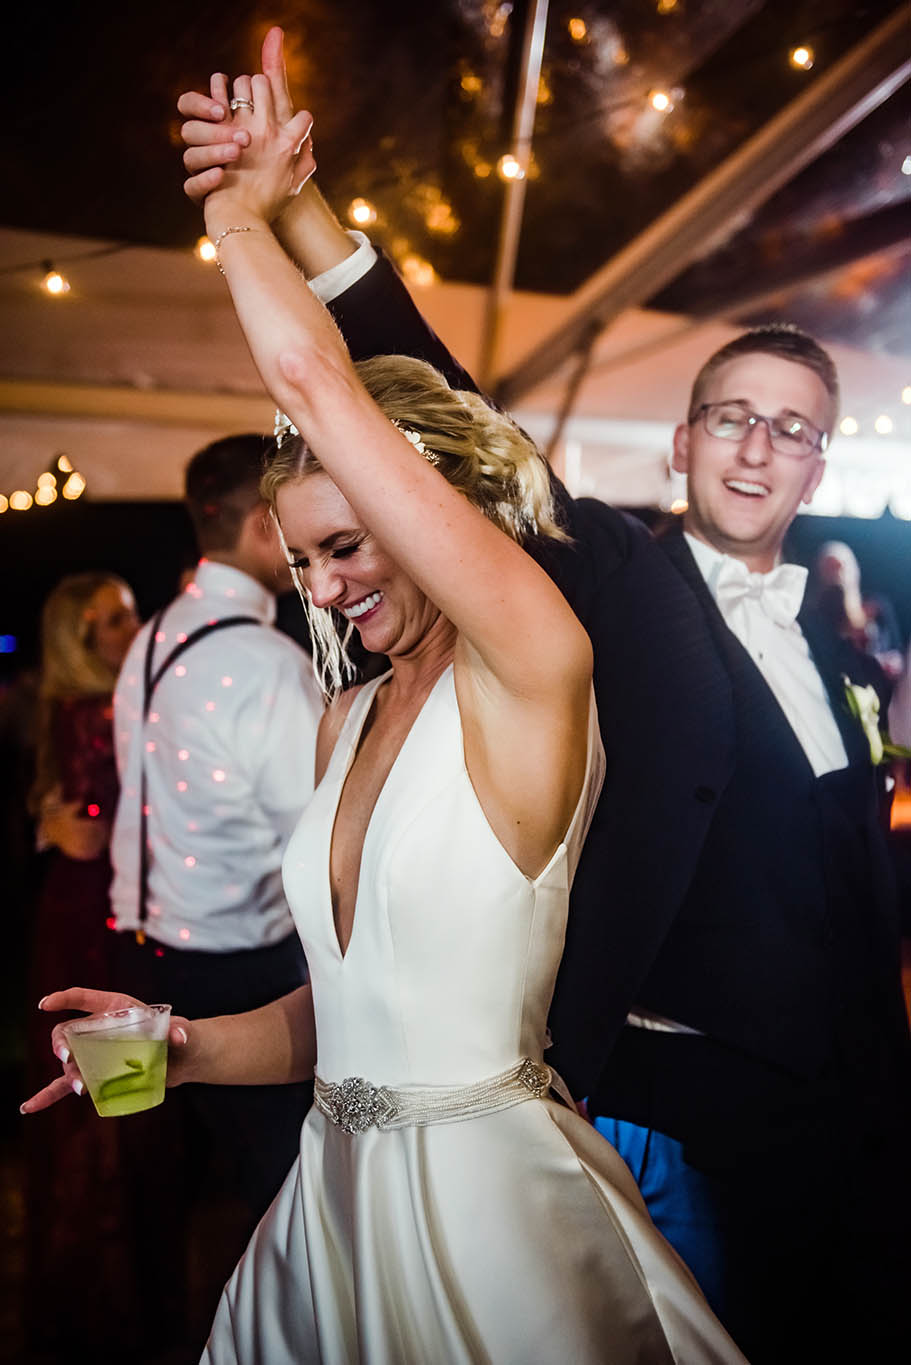 dancing on dance flor at wedding